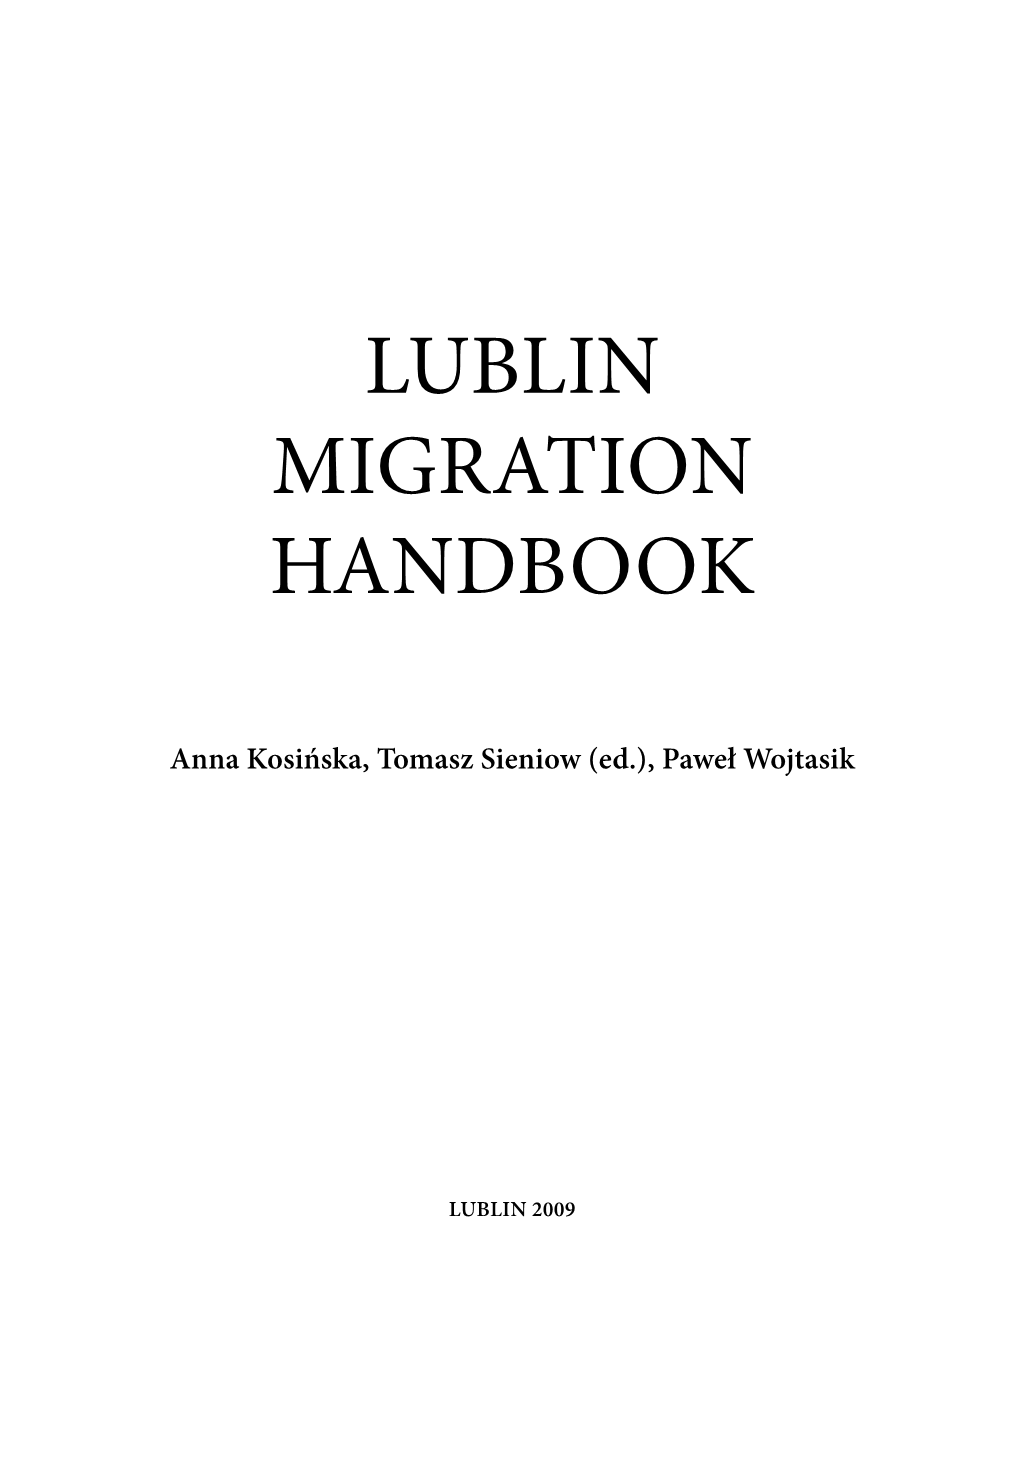 Lublin Migration Handbook